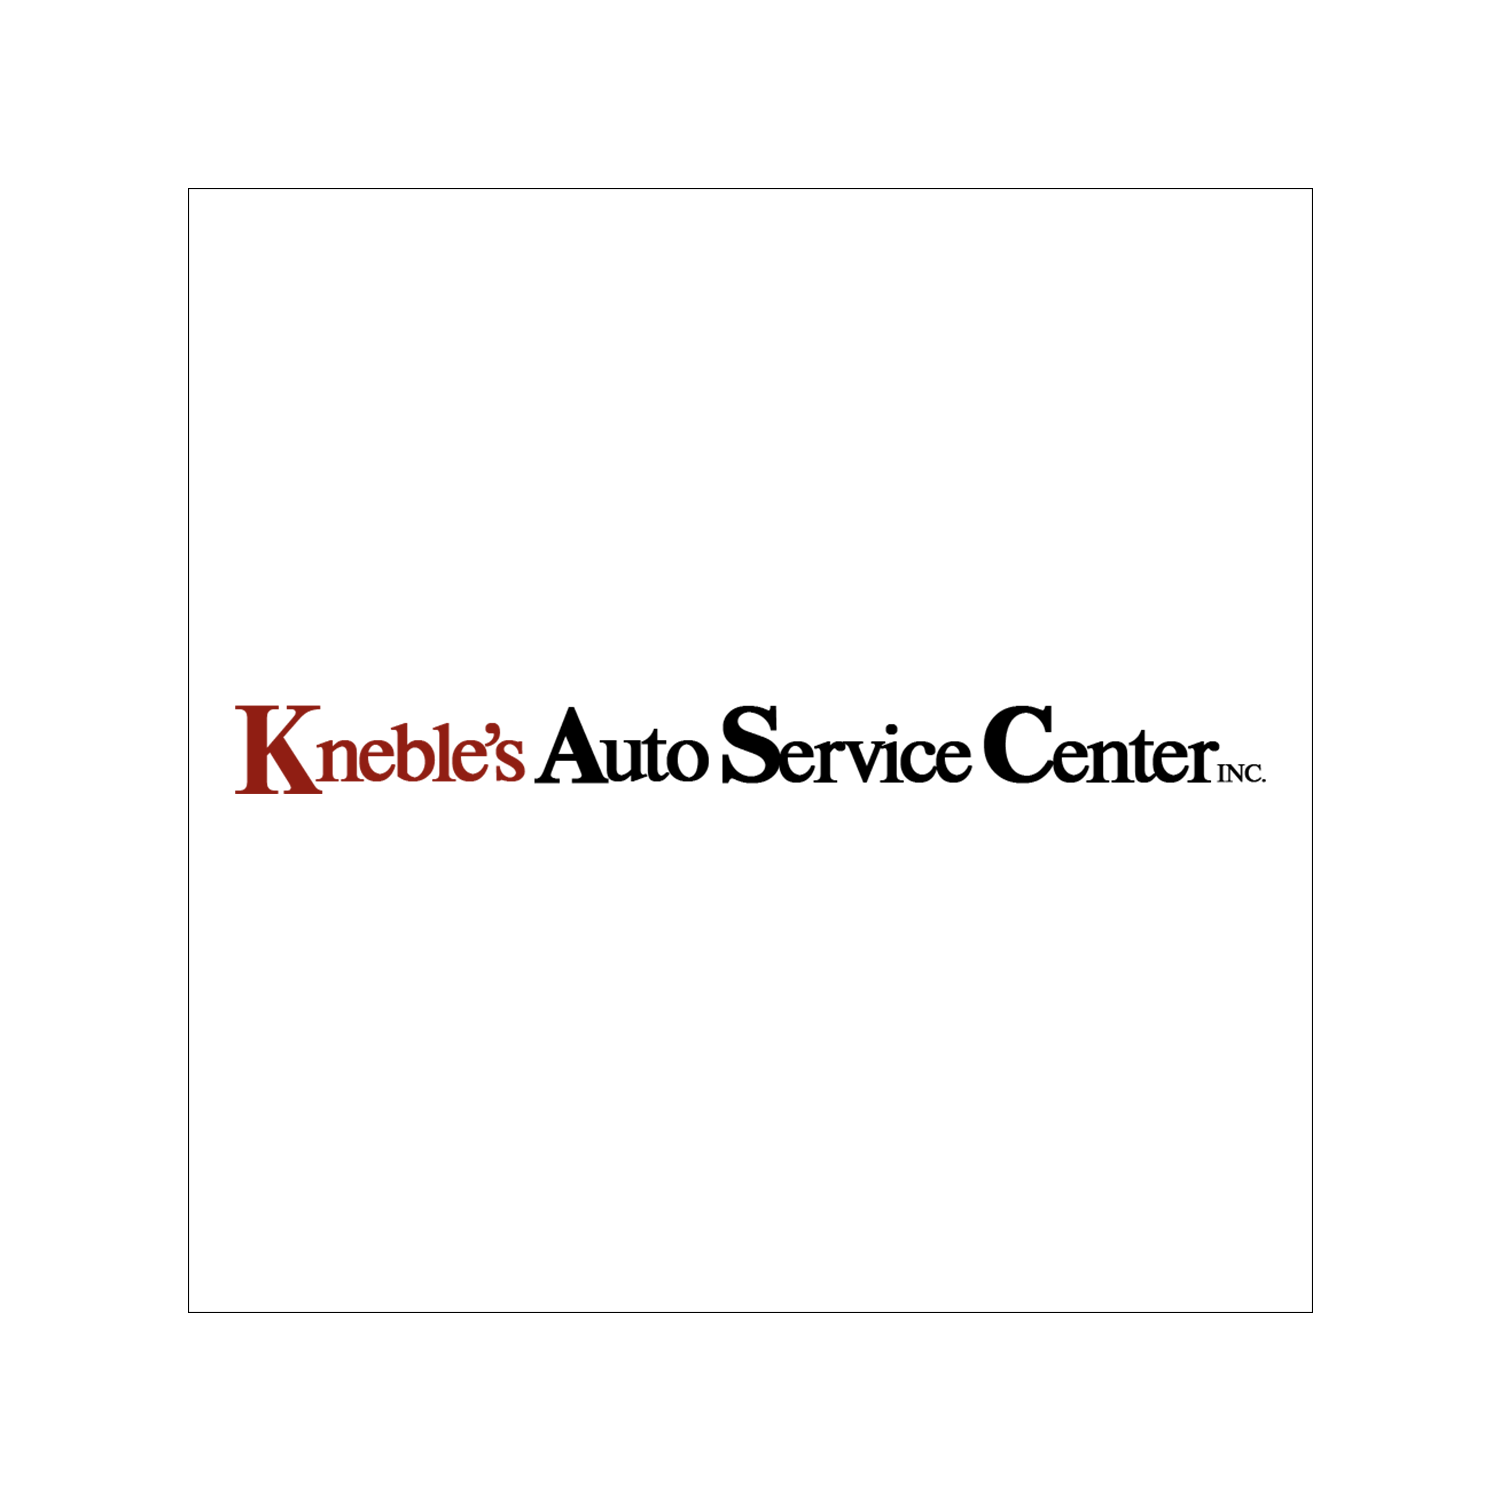 Kneble's Auto Service Center Inc.